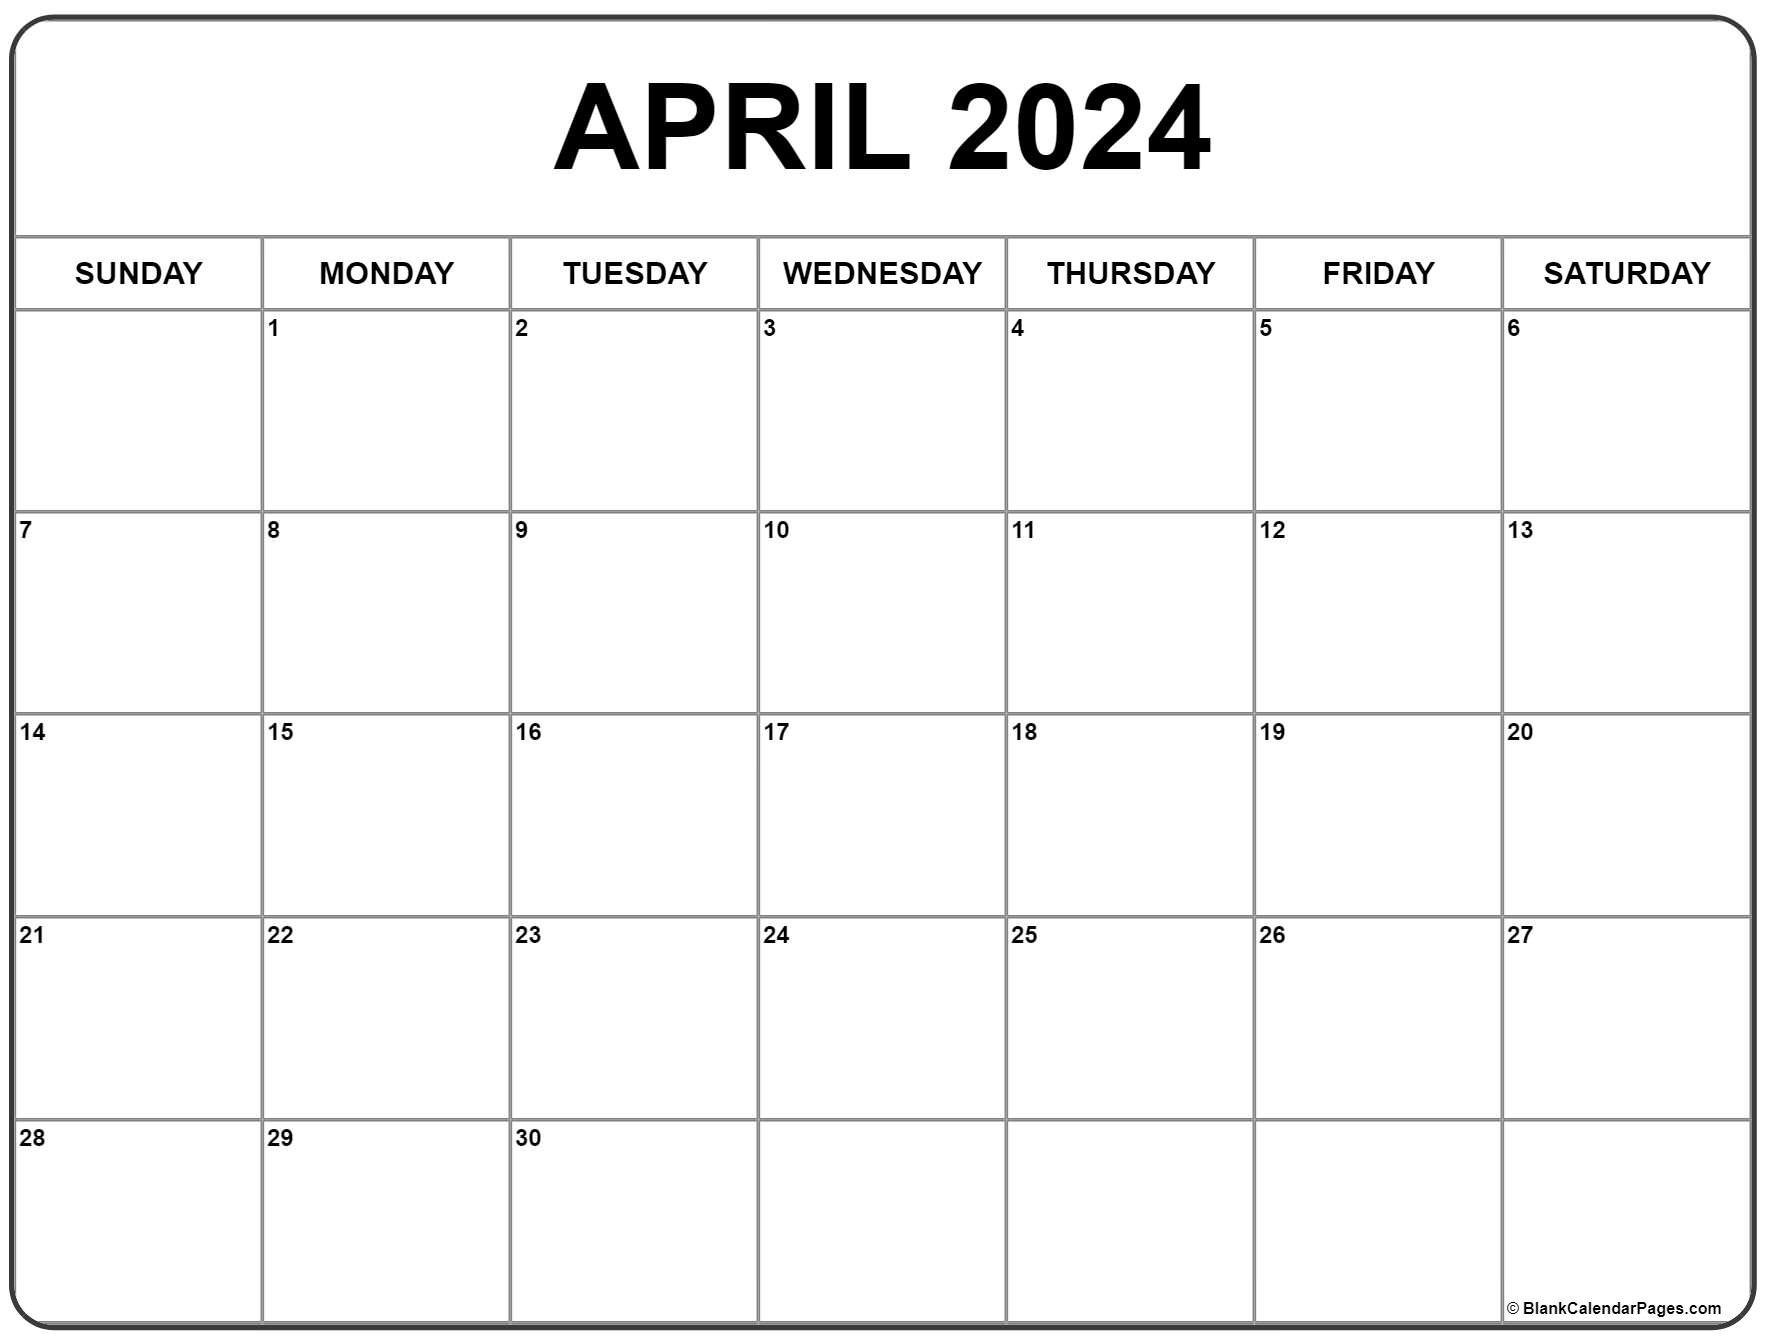 April 2024 Calendar | Free Printable Calendar for Printable Calendar April And May 2024